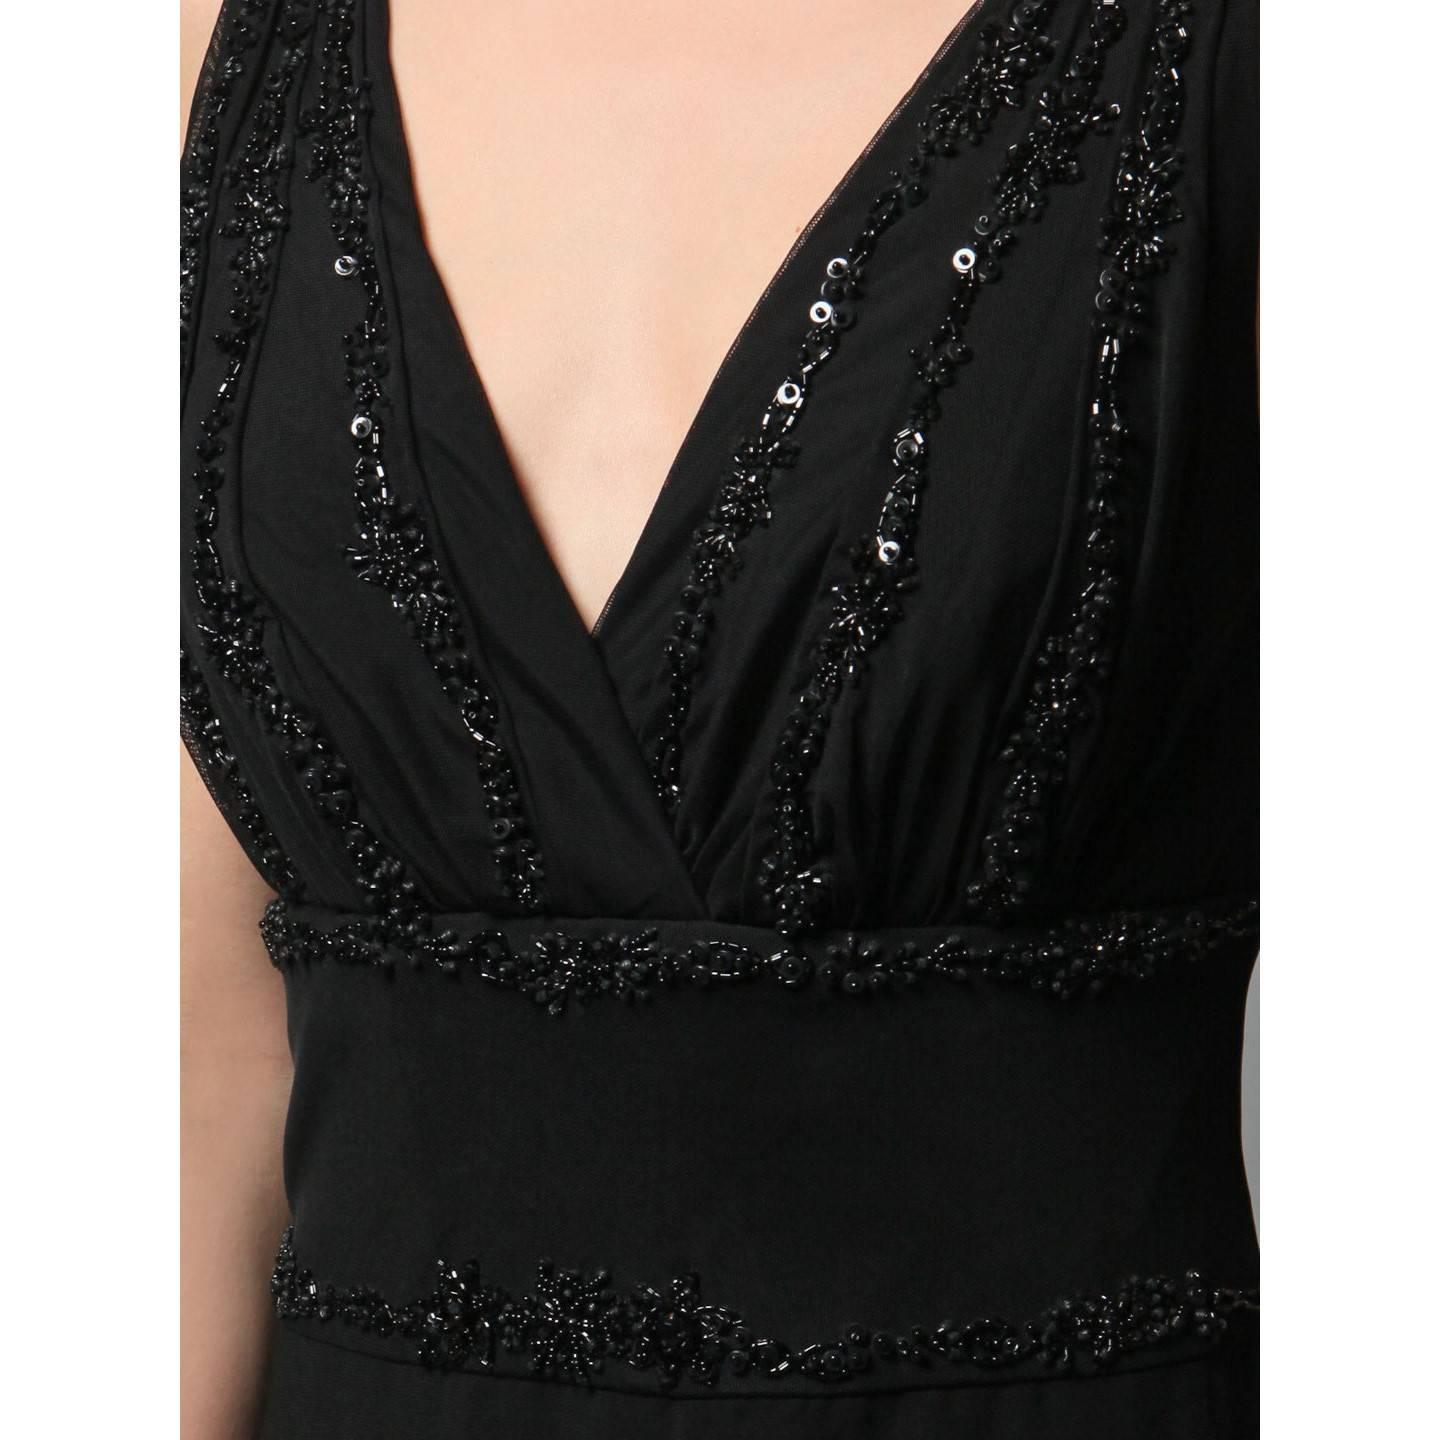 New Badgley Mischka Couture Beaded Evening Dress Gown Sz 6 2